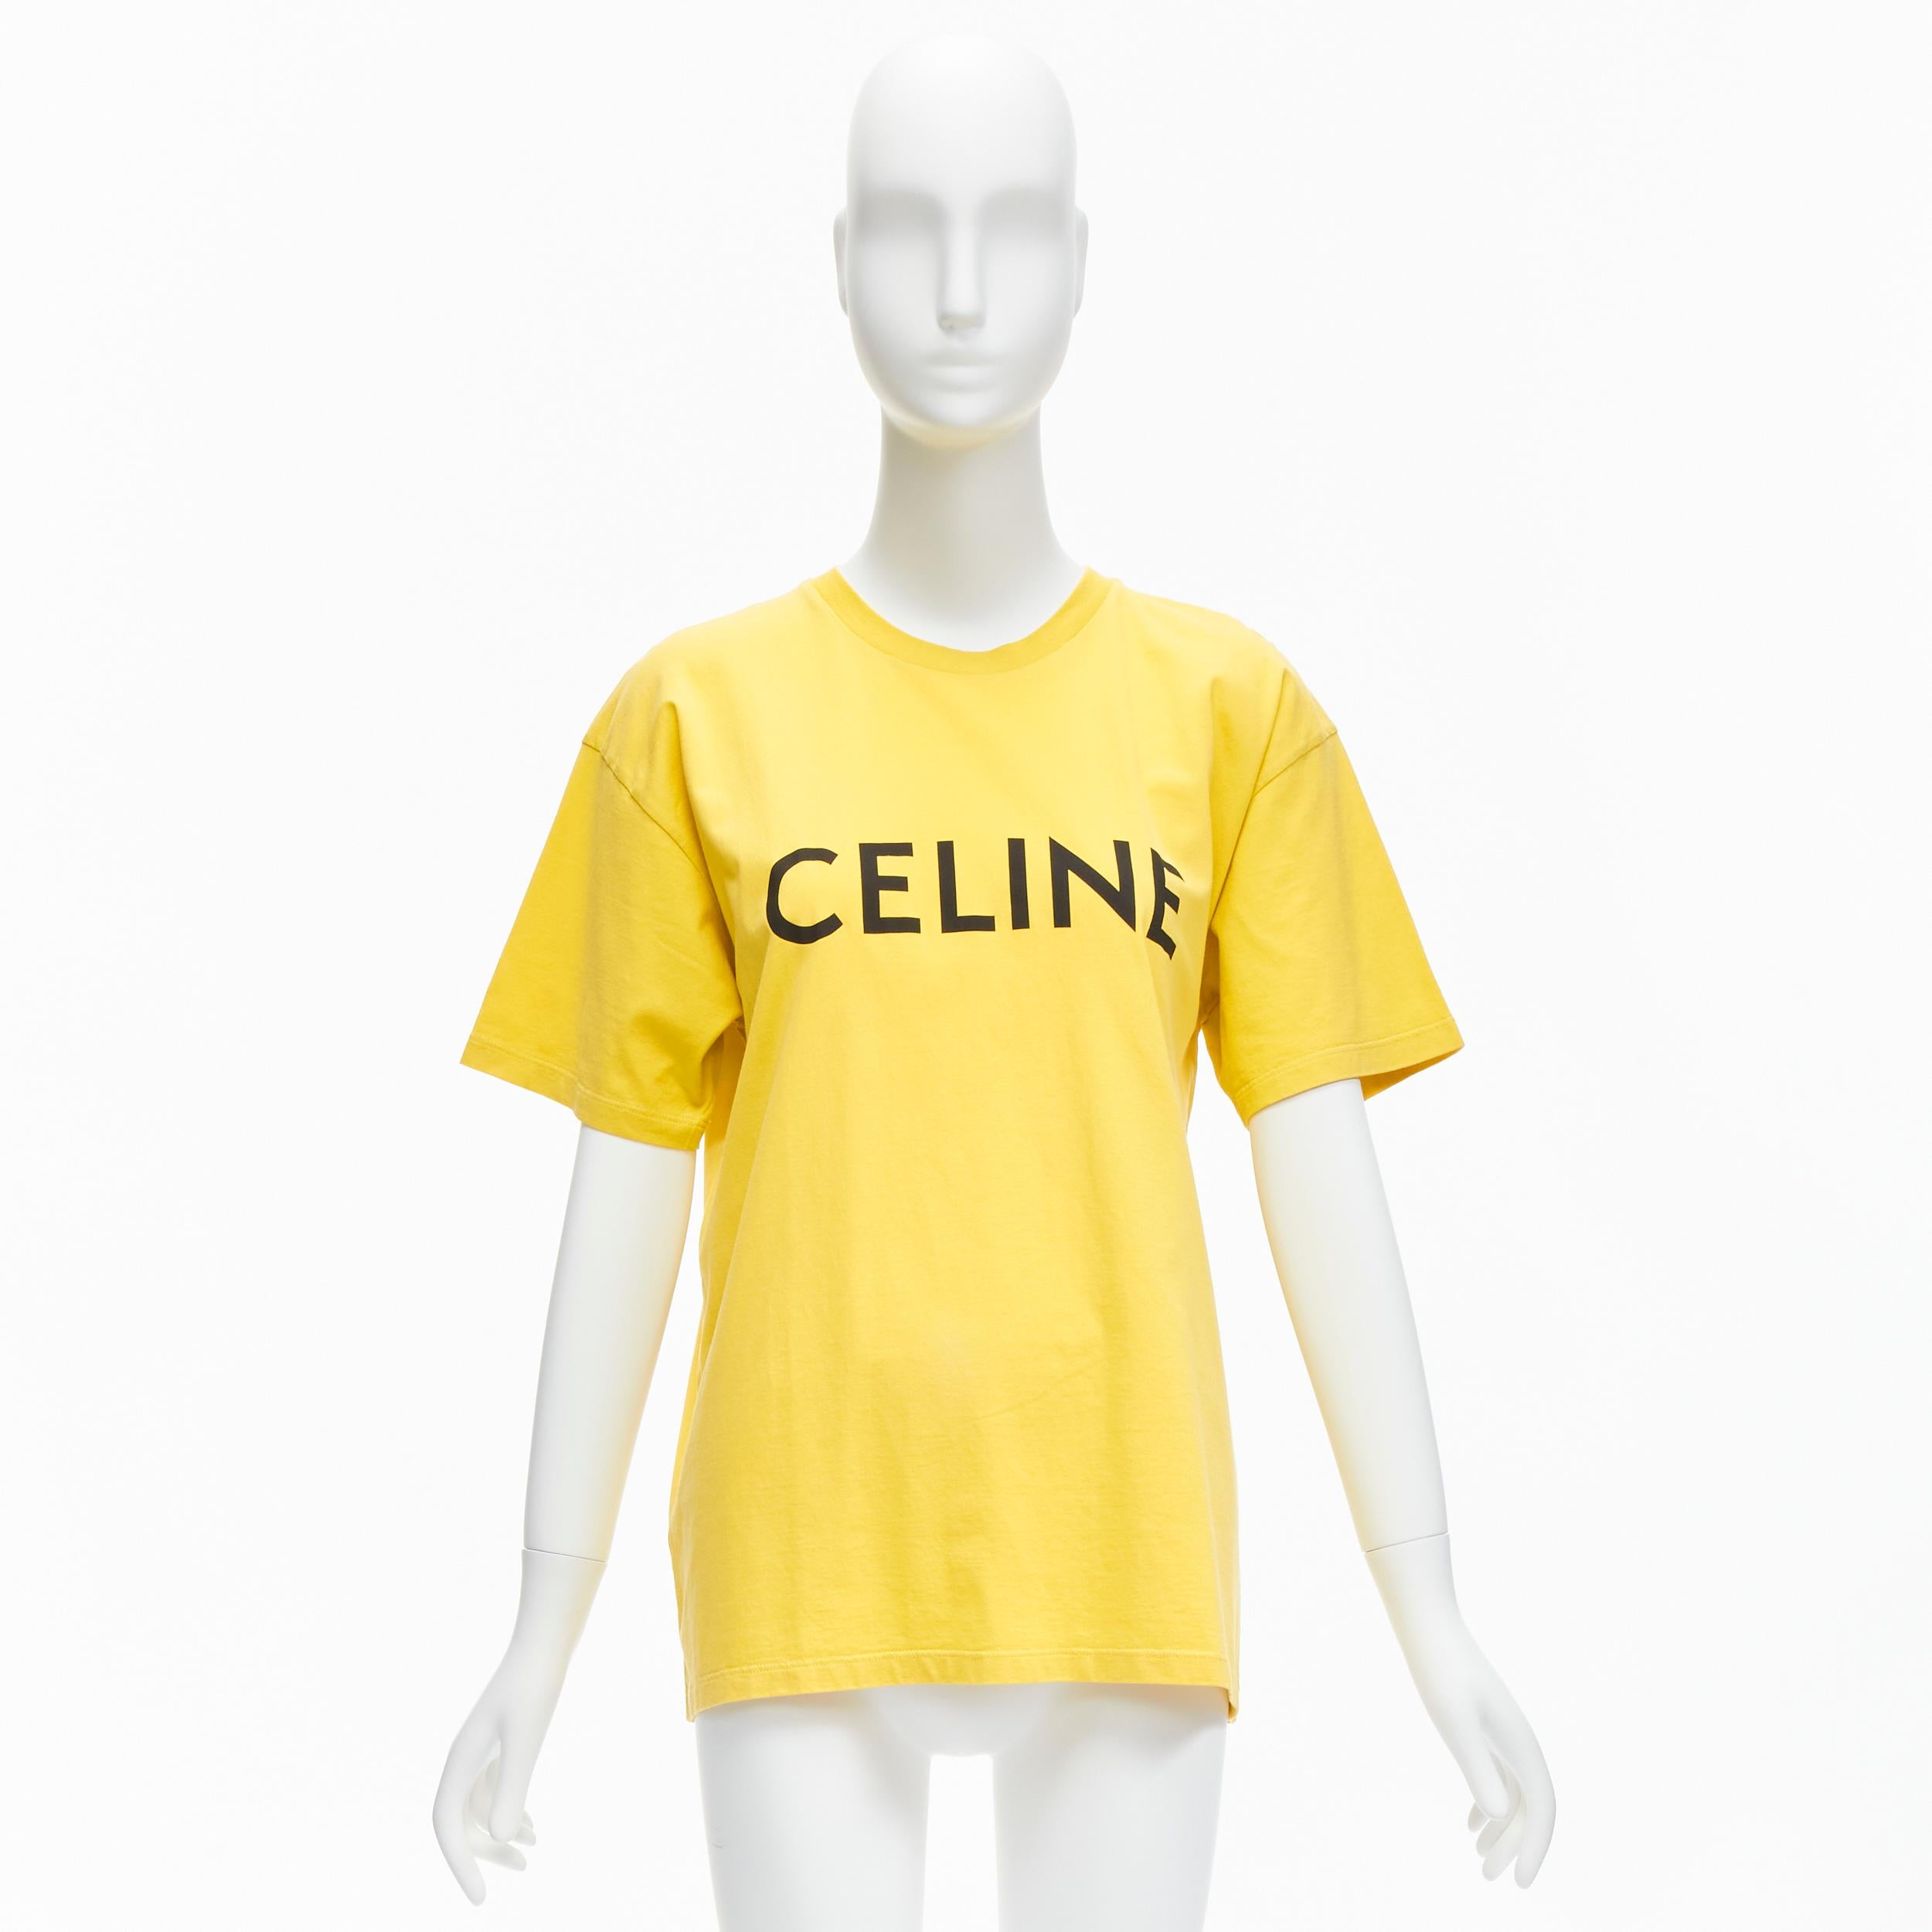 CELINE Hedi Slimane yellow black logo cotton short sleeves round neck tshirt XS For Sale 4